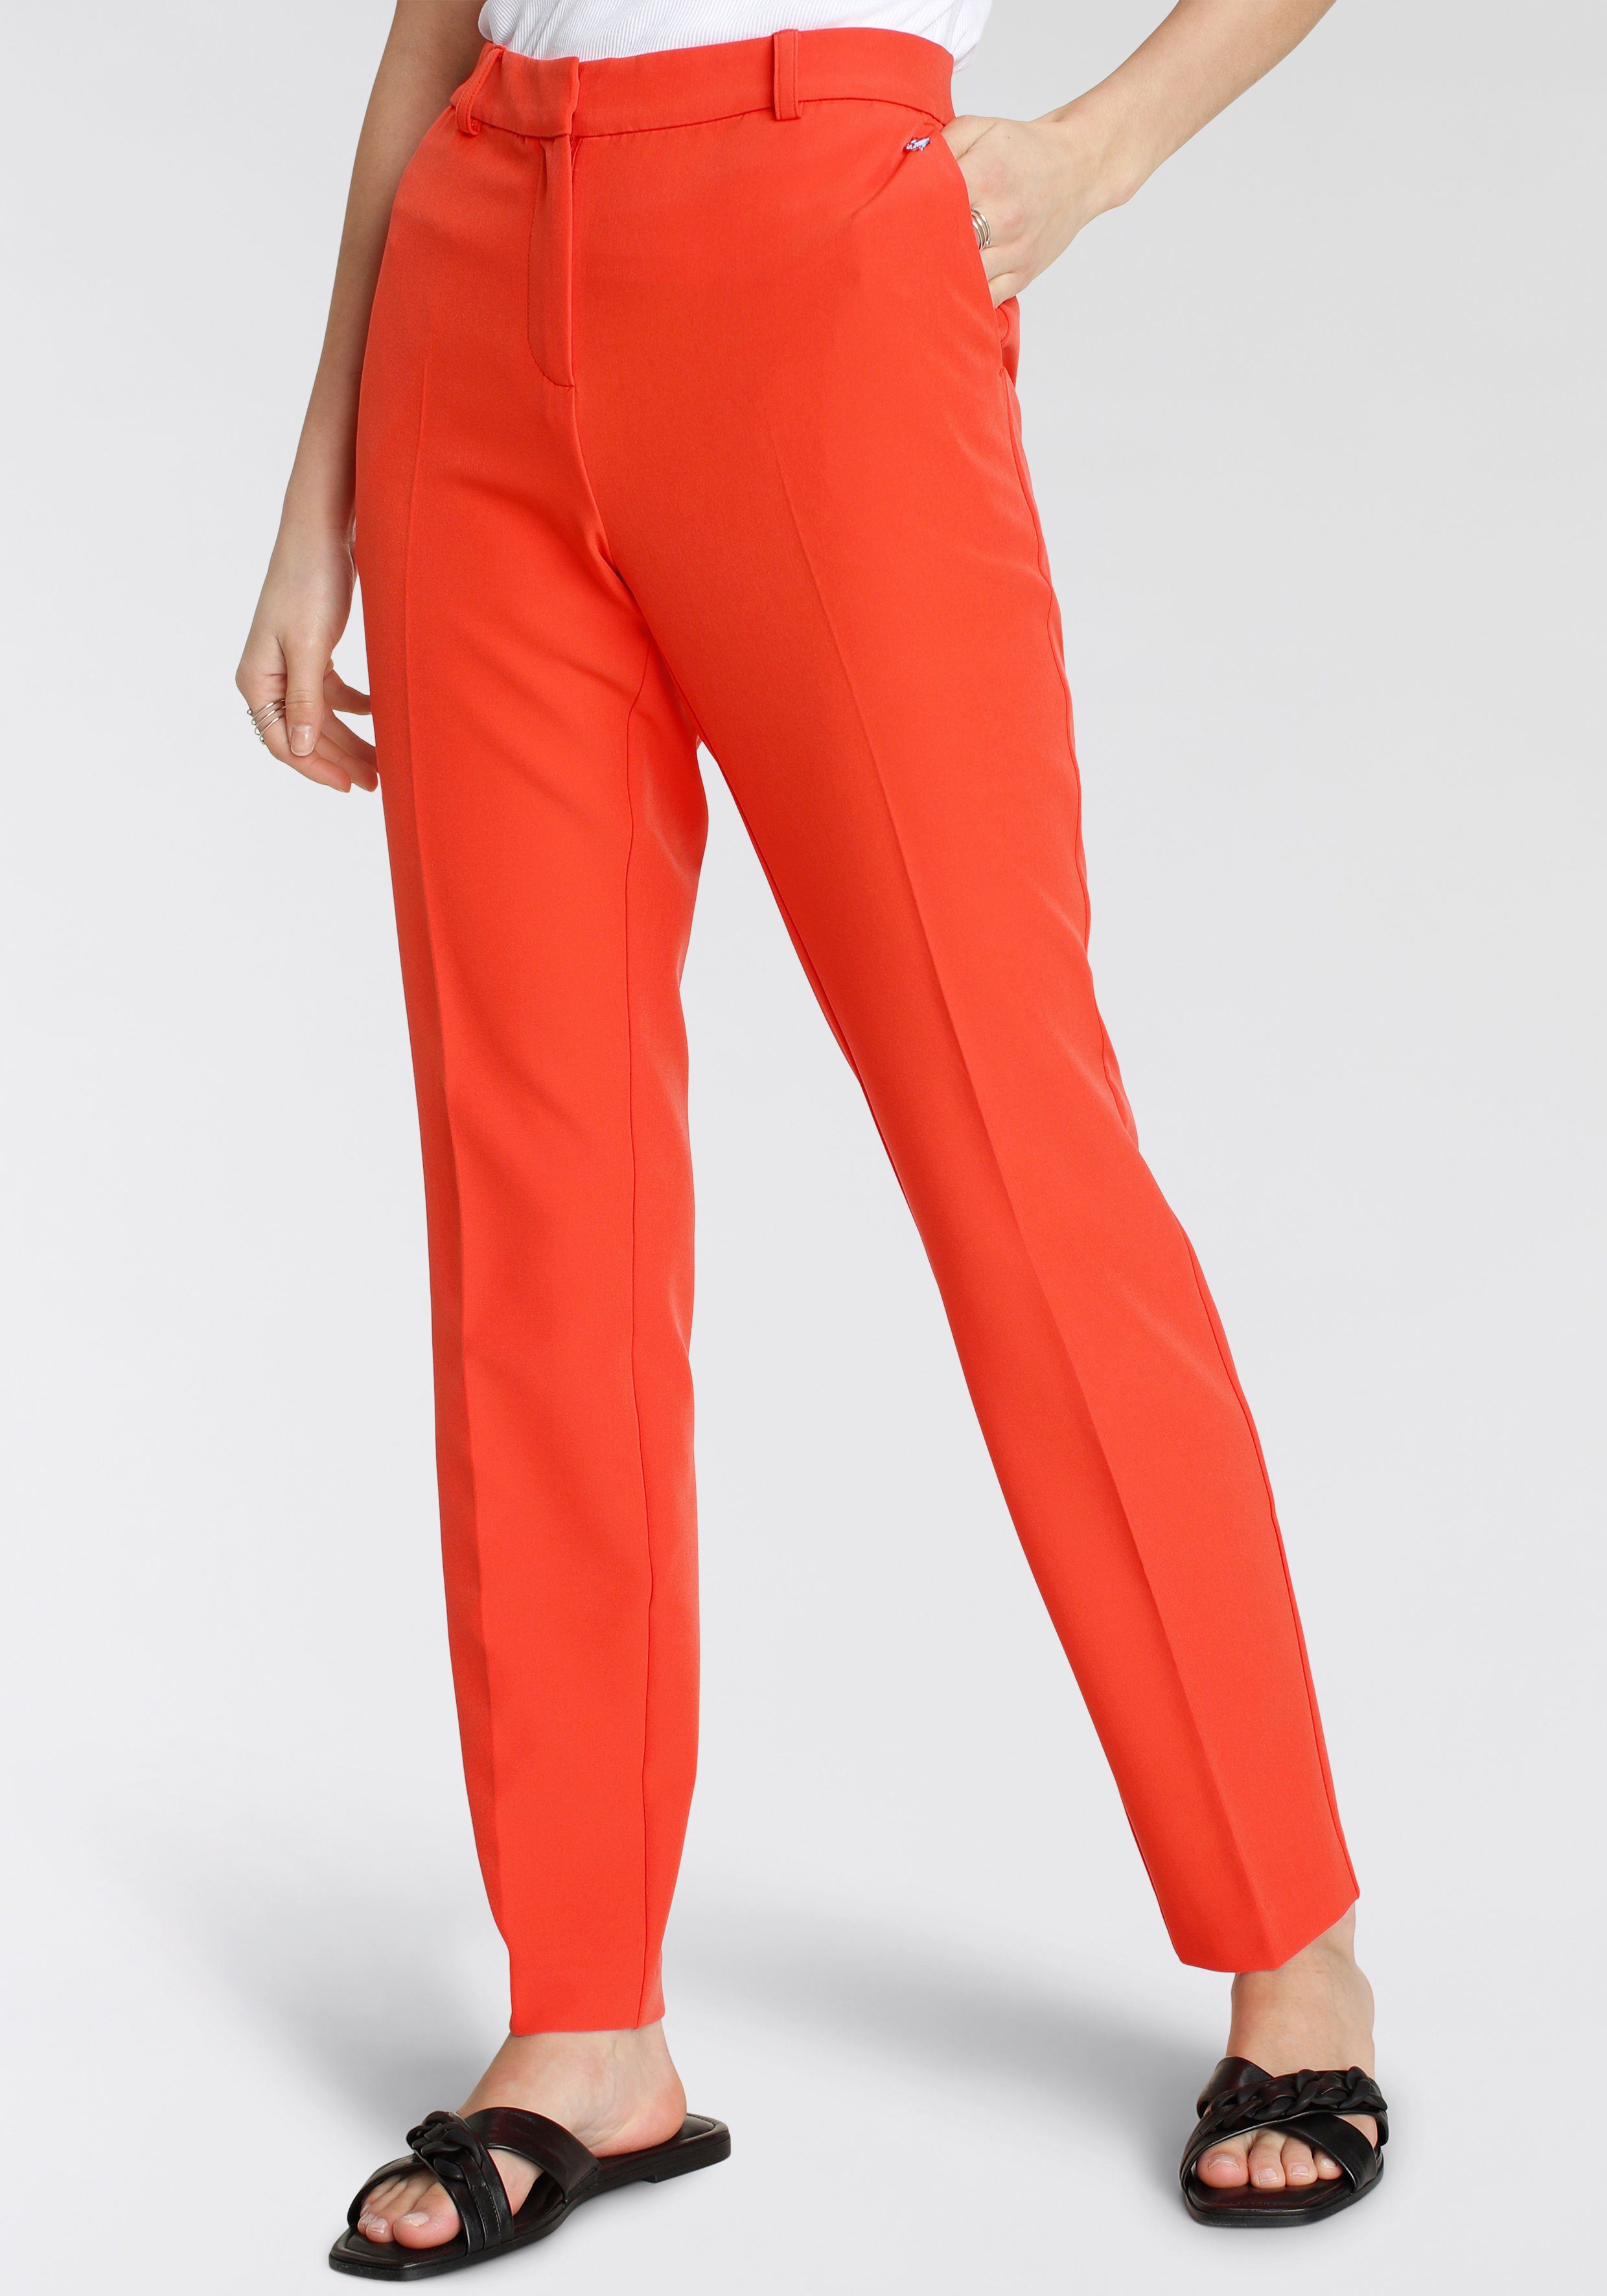 Tamaris Anzughose orange nachhaltigem Material) (Hose in aus Trendfarben